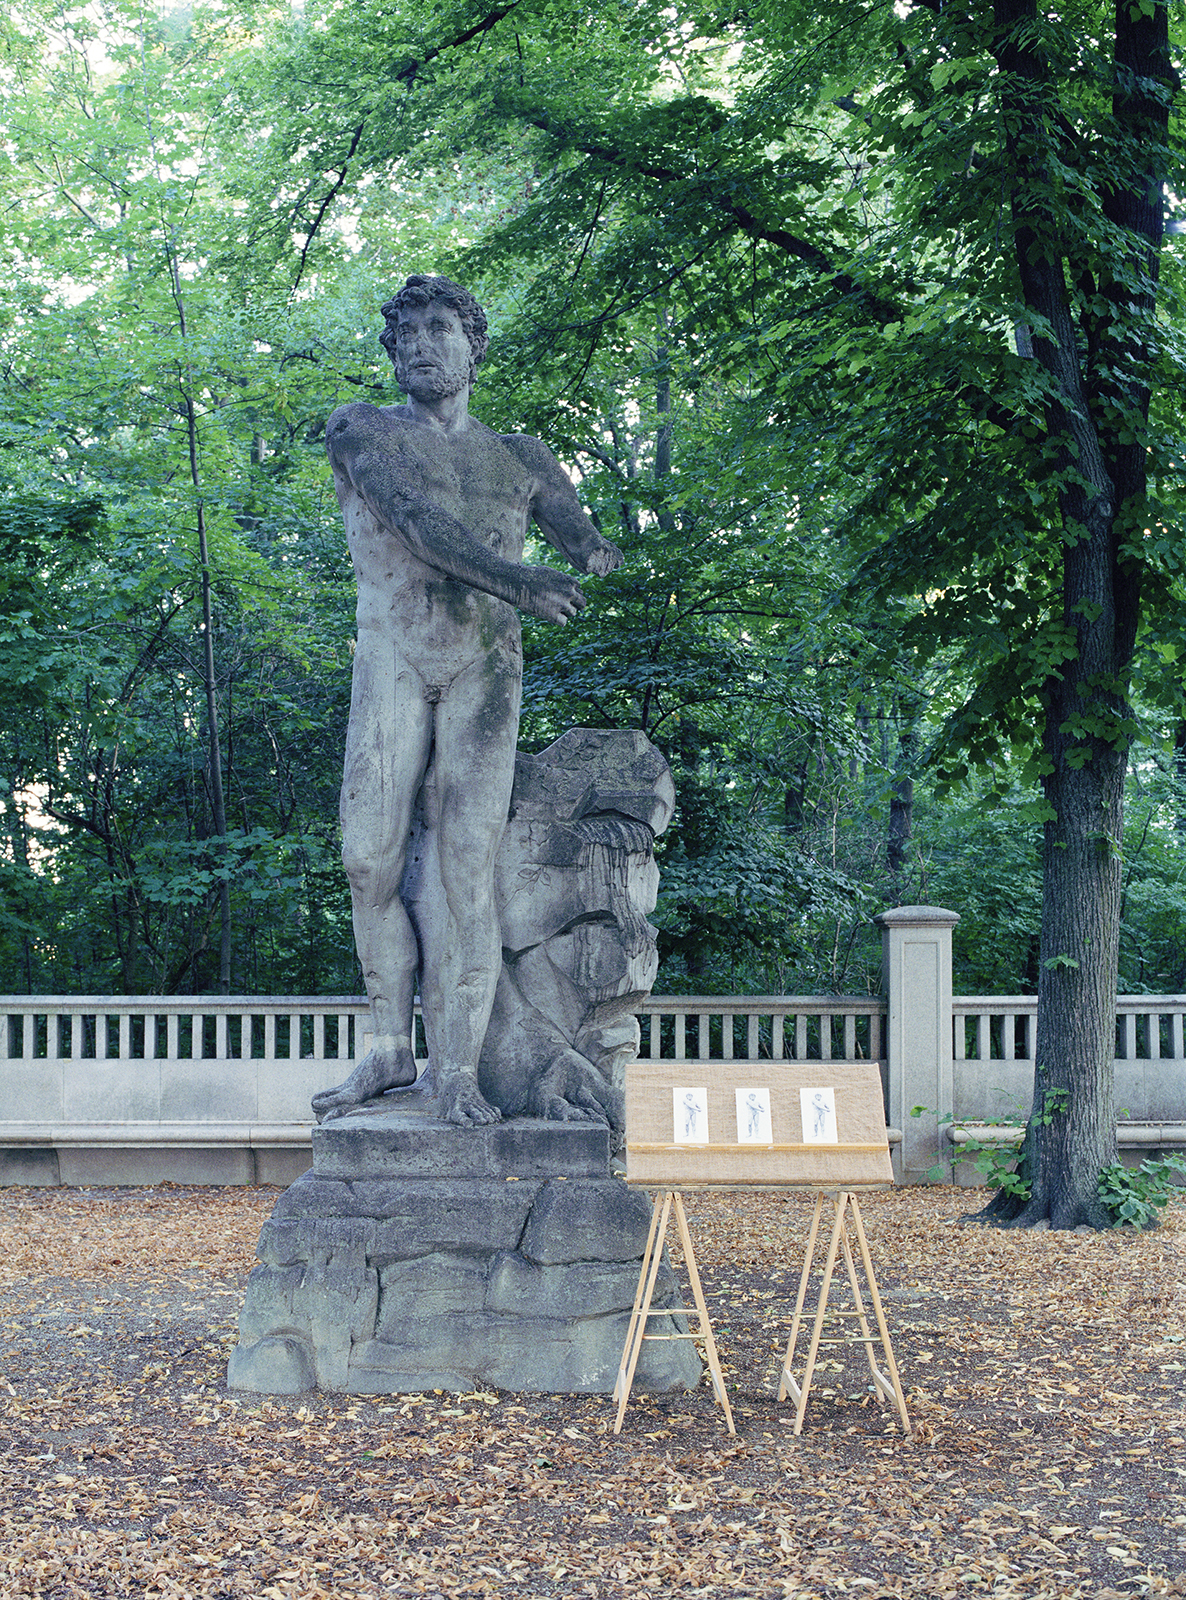 Hiro Hirakawa, view of the installation including the work Herkules Musagetes (1745) by Georg Franz Ebenhecht in Tiergarten, Berlin, Germany, Sept. 2020, 平川ヒロ